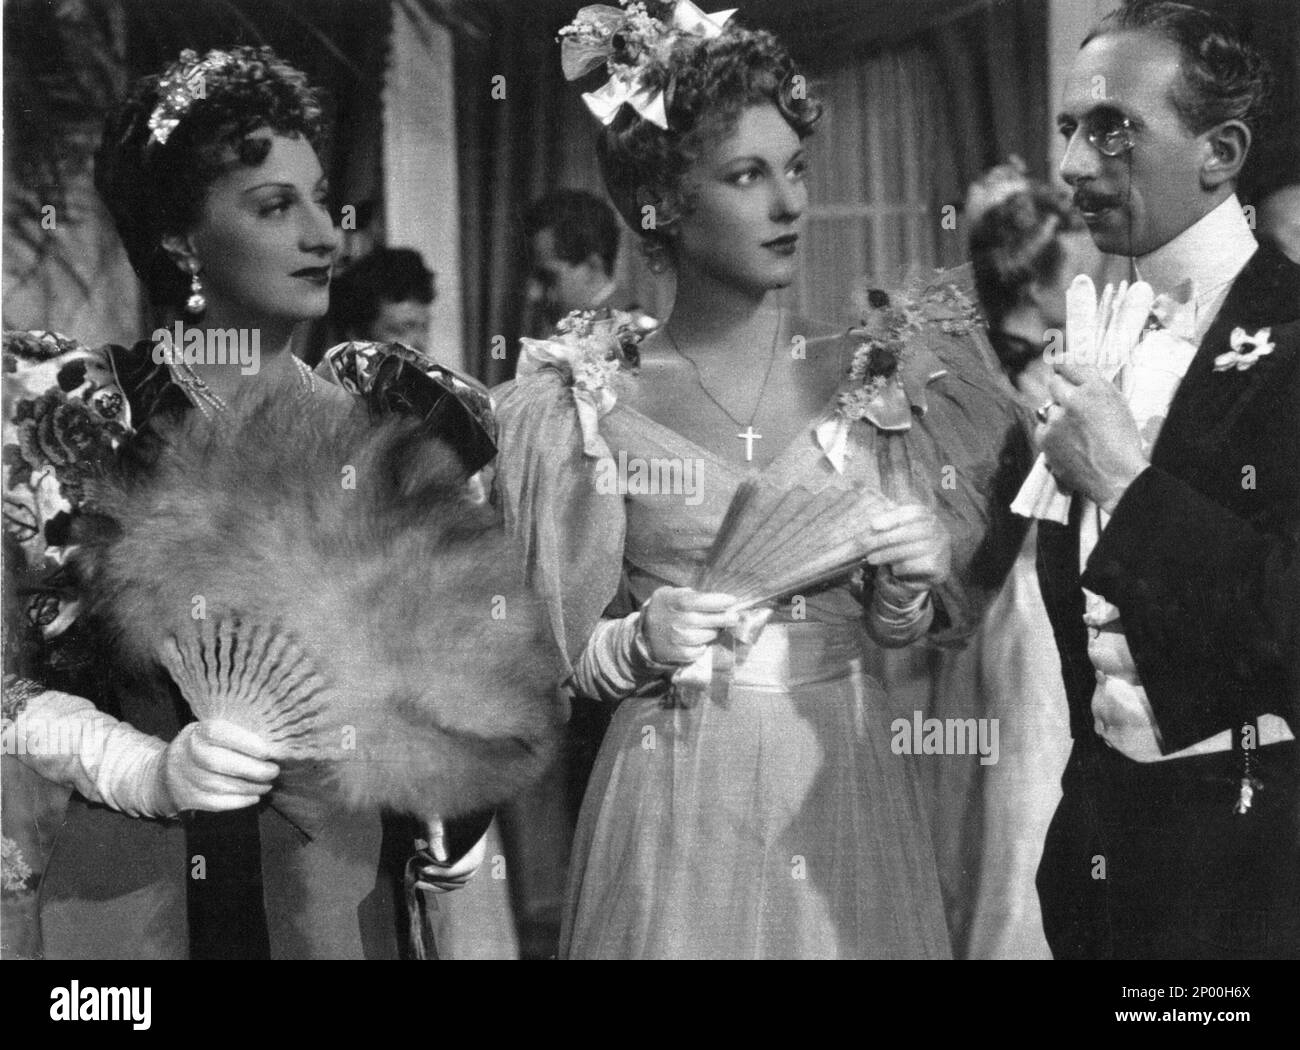 1943 : La actriz italiana de teatro y cine TINA LATTANZI ( Alatri 15 de febrero de 1902 - Roma 25 de octubre de 1997 ), la voz de Greta Garbo , Joan Crafword y Marlene Dietrich en las ediciones italianas de Hollywood Movies . En esta foto con VALENTINA CORTESE ( en el centro ) En LA CARICA DEGLI EROI de Oreste Biancoli y Anton Giulio Majano - TEATRO - retrato - ritratto - CINE - ANNI QUARANTA - años 40 - '40 - gotas - orecchino - orecchini - abanico - ventaglio - plumas - piume - chignon - joyas - joyas - Gioielli - gioiello - DOPPIAGGIO - DOPPIATORE - DOPPIATRICE ---- Archivi Foto de stock